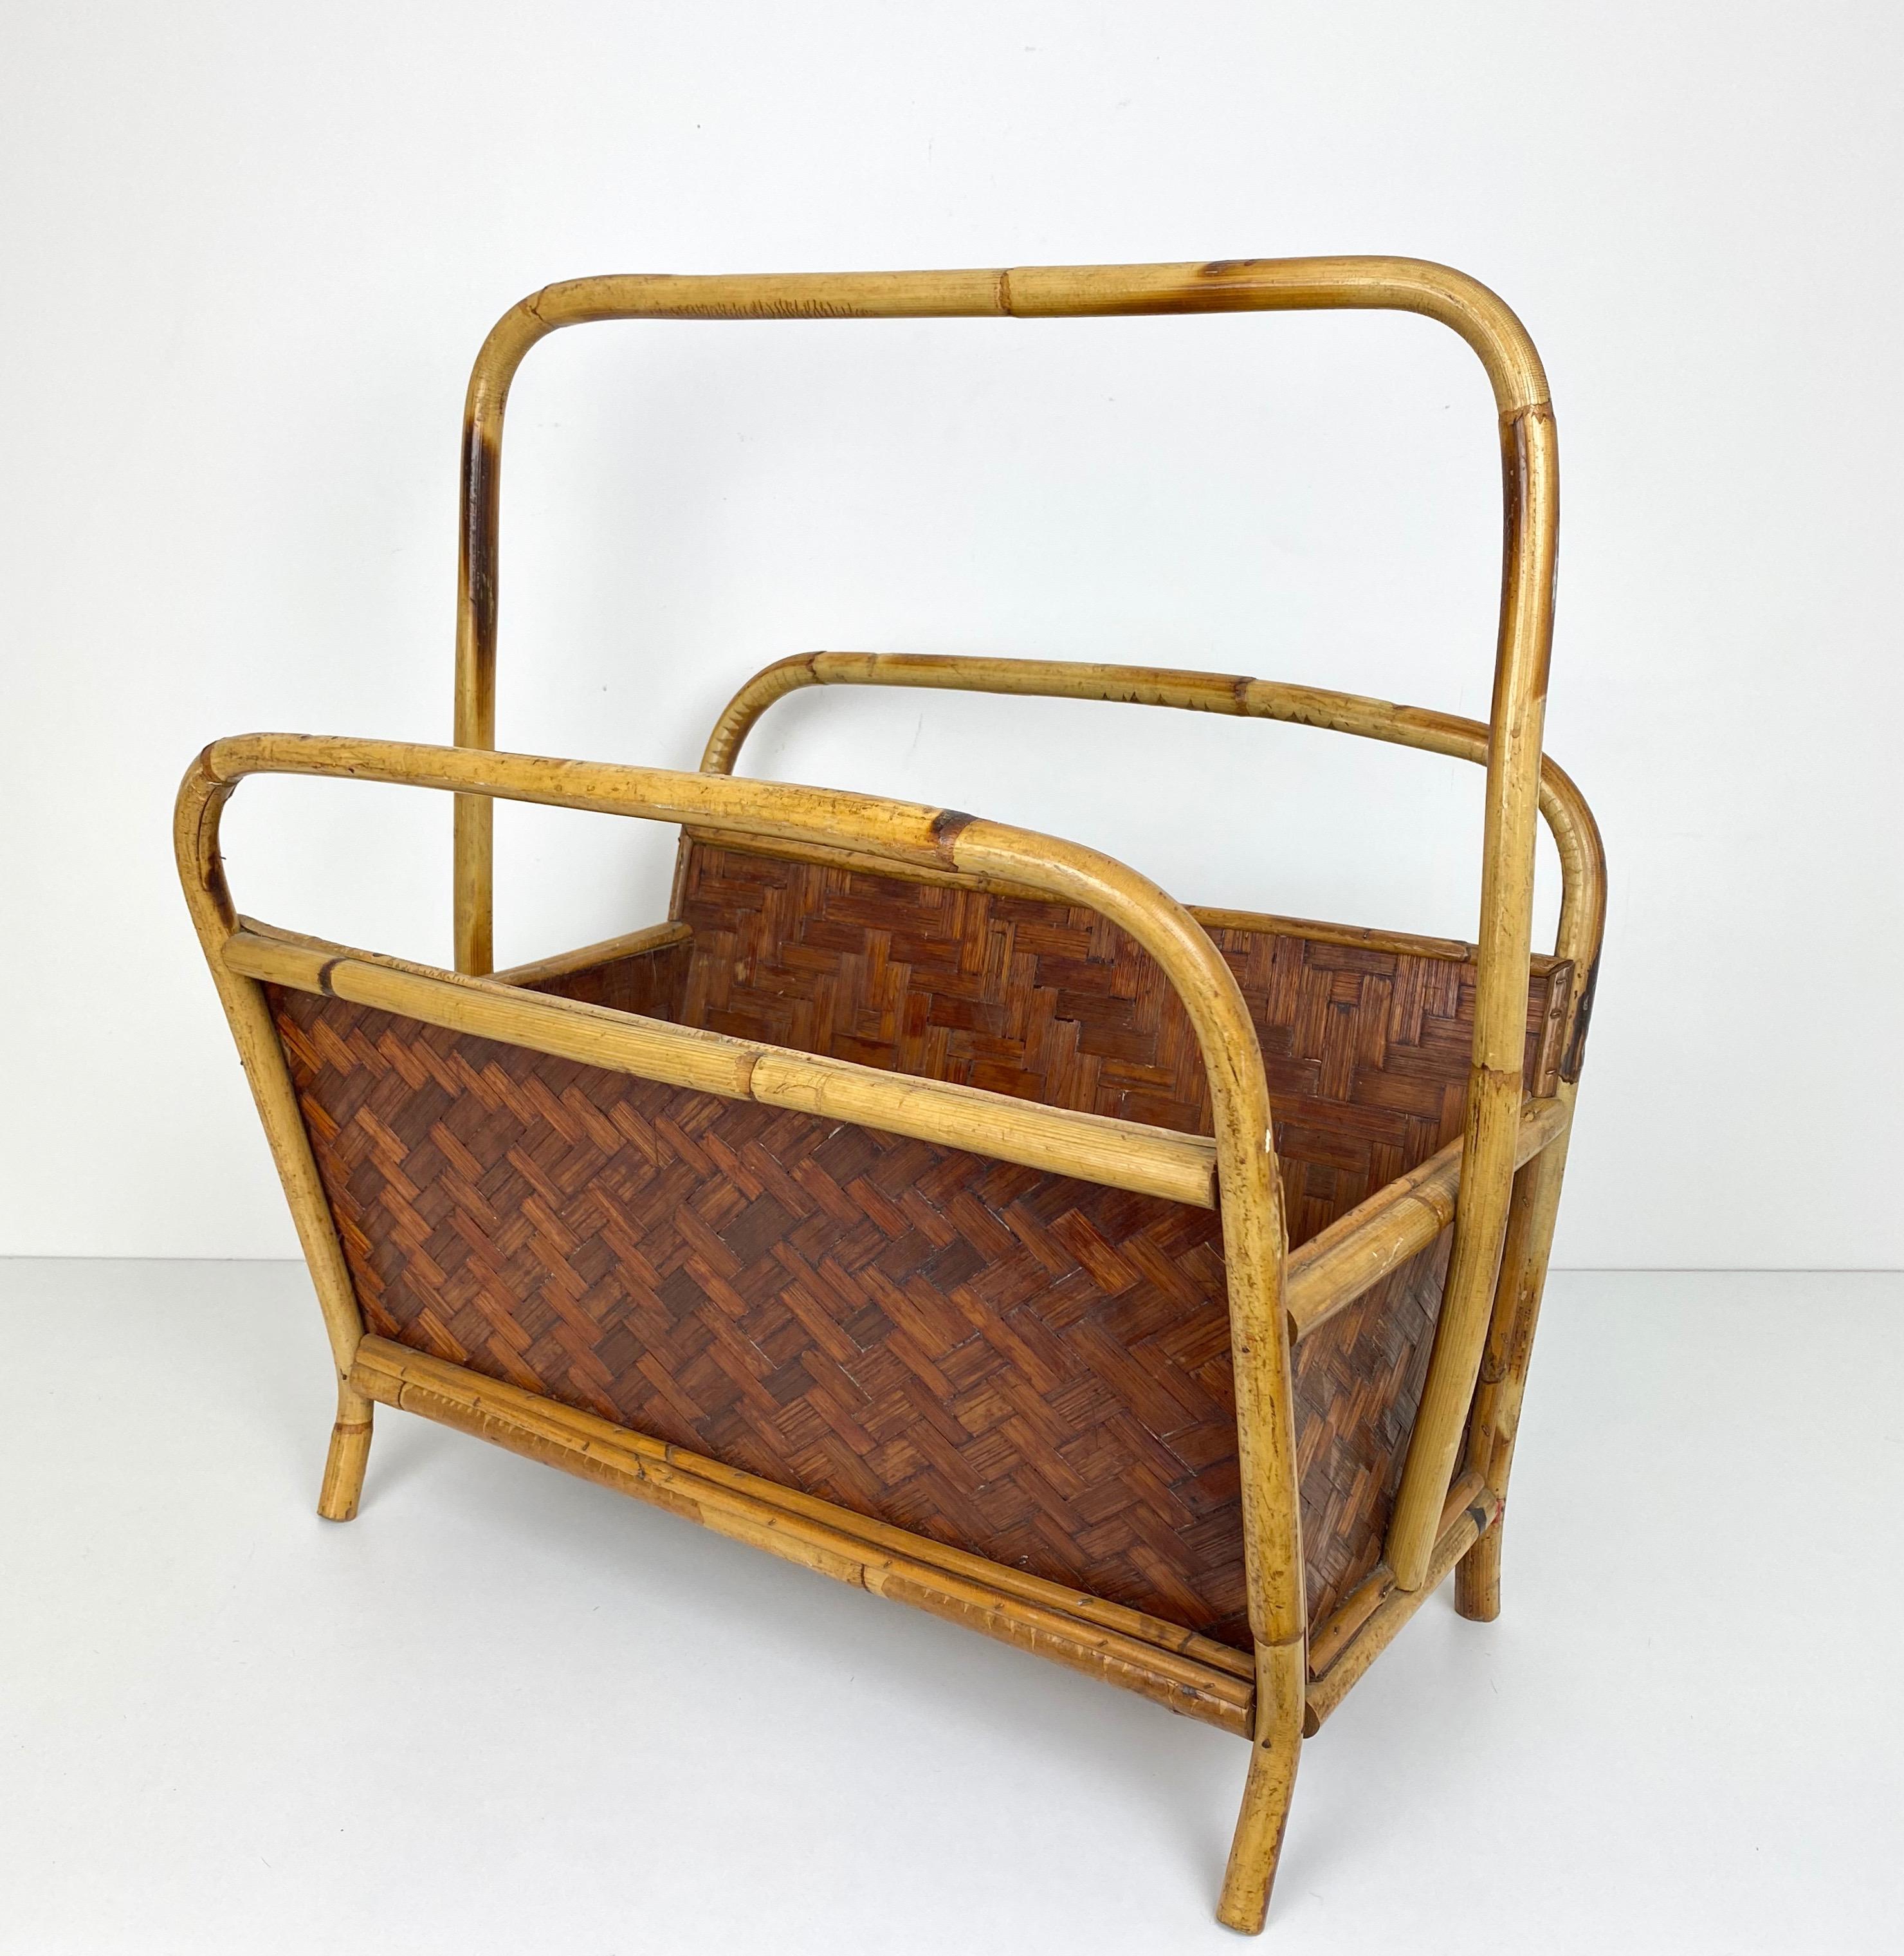 Magazine rack in rattan and bamboo, in the style of the Italian 1960s designer Franco Albini.